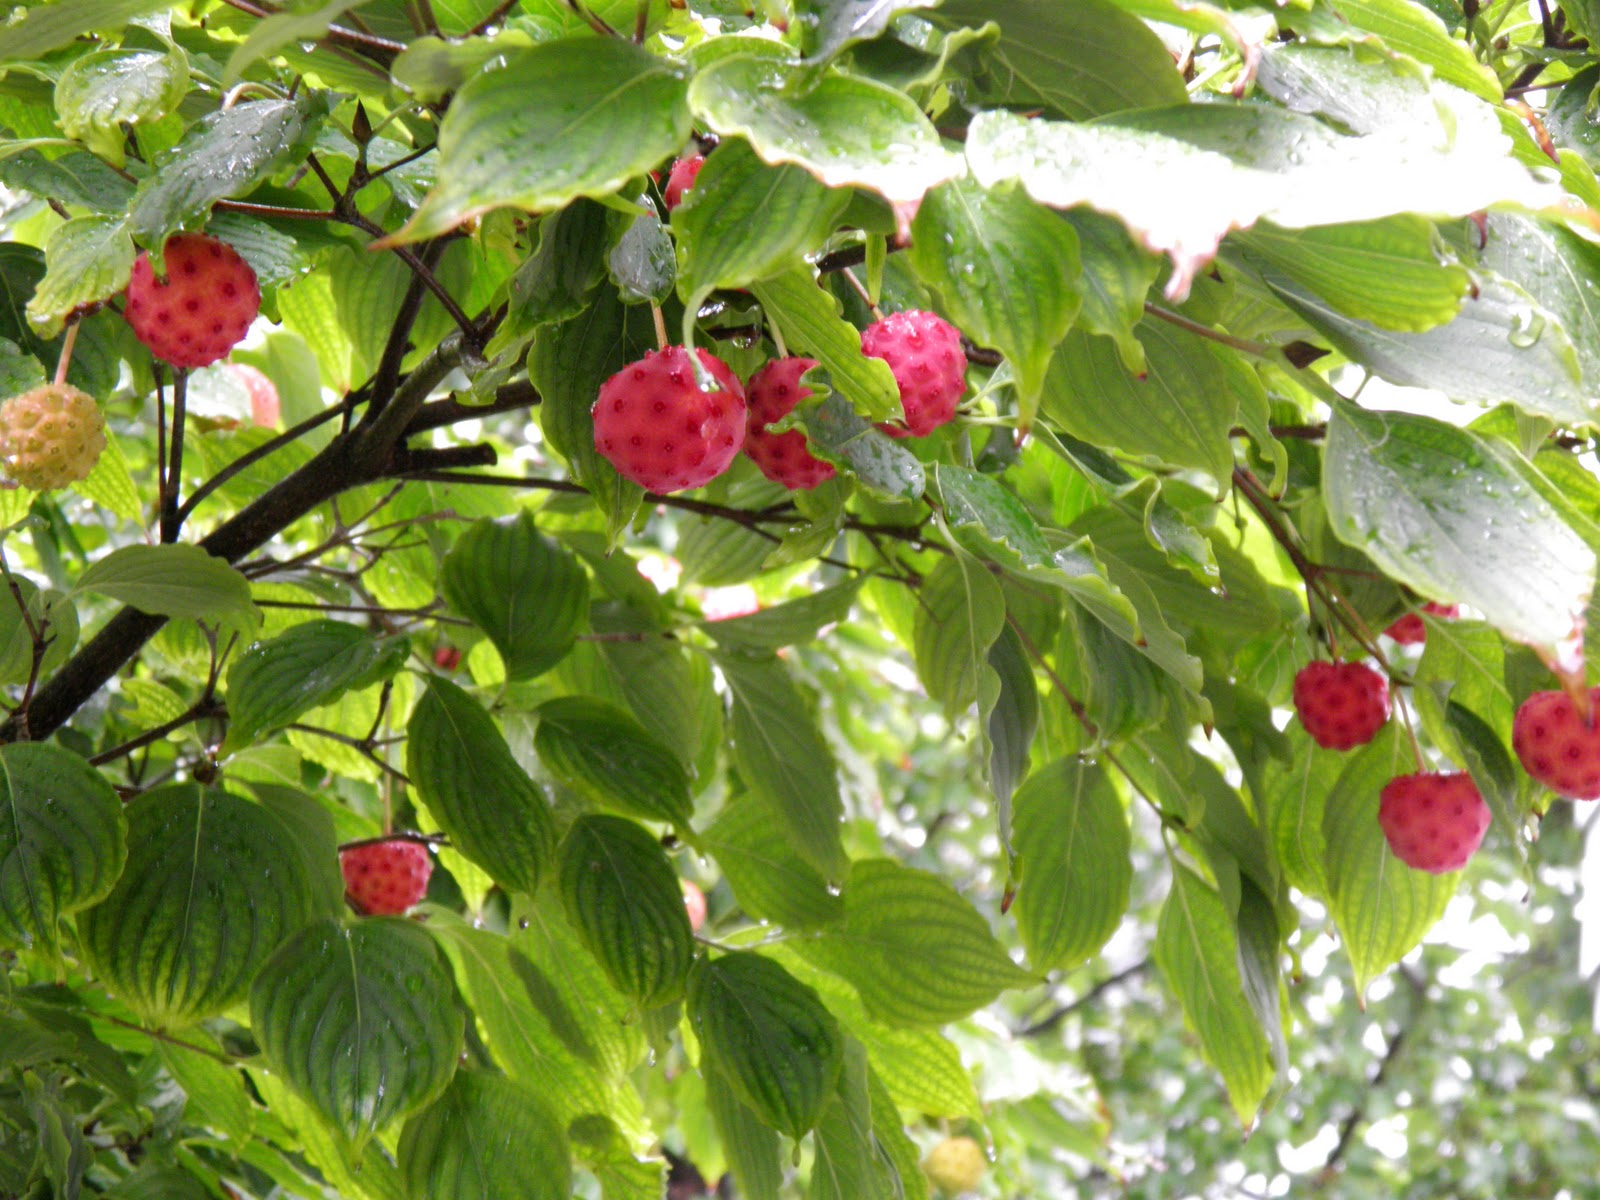 Dogwood+tree+berries+poisonous